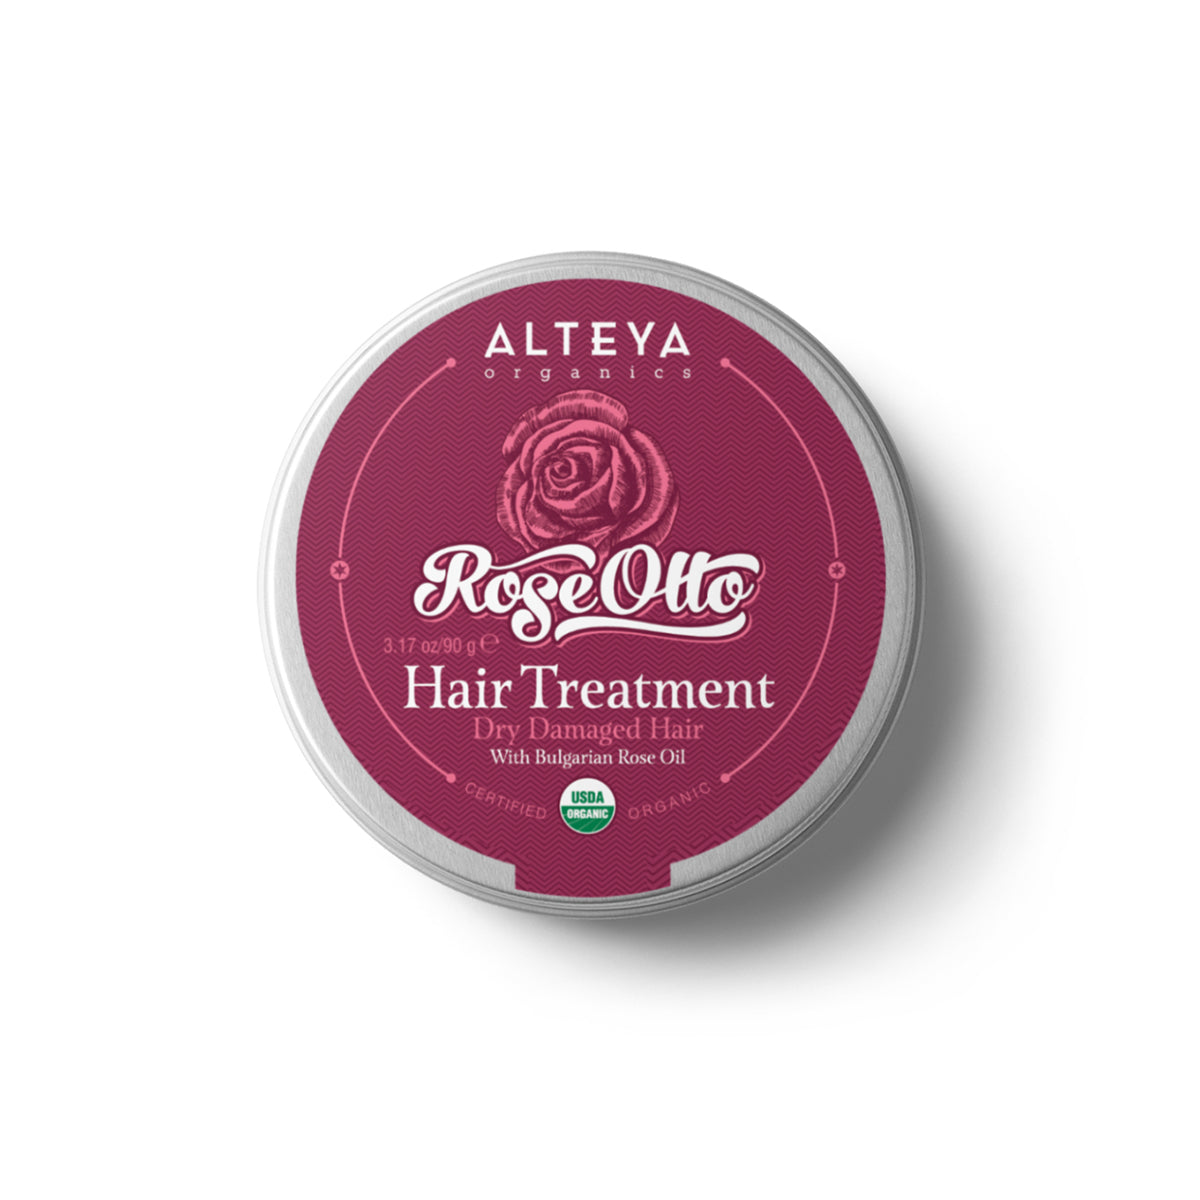 A nourishing tin of Alteya Organics Hair Treatment Rose Otto Dry Damaged Hair Moisturizing.